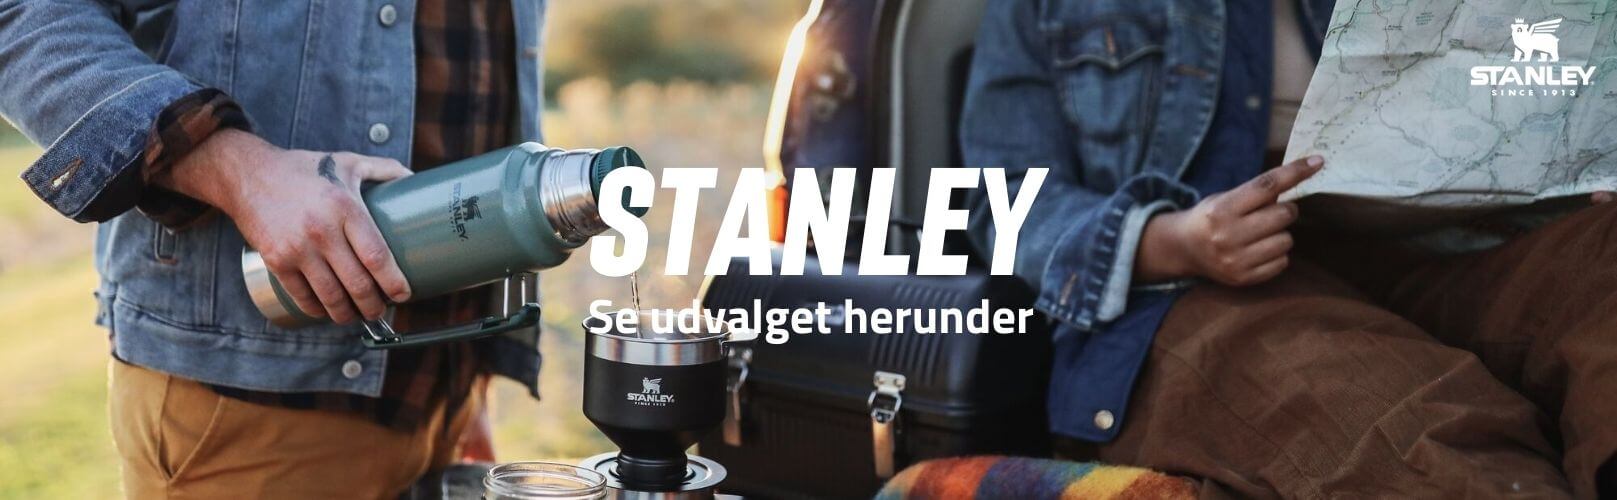 Stanley brand banner